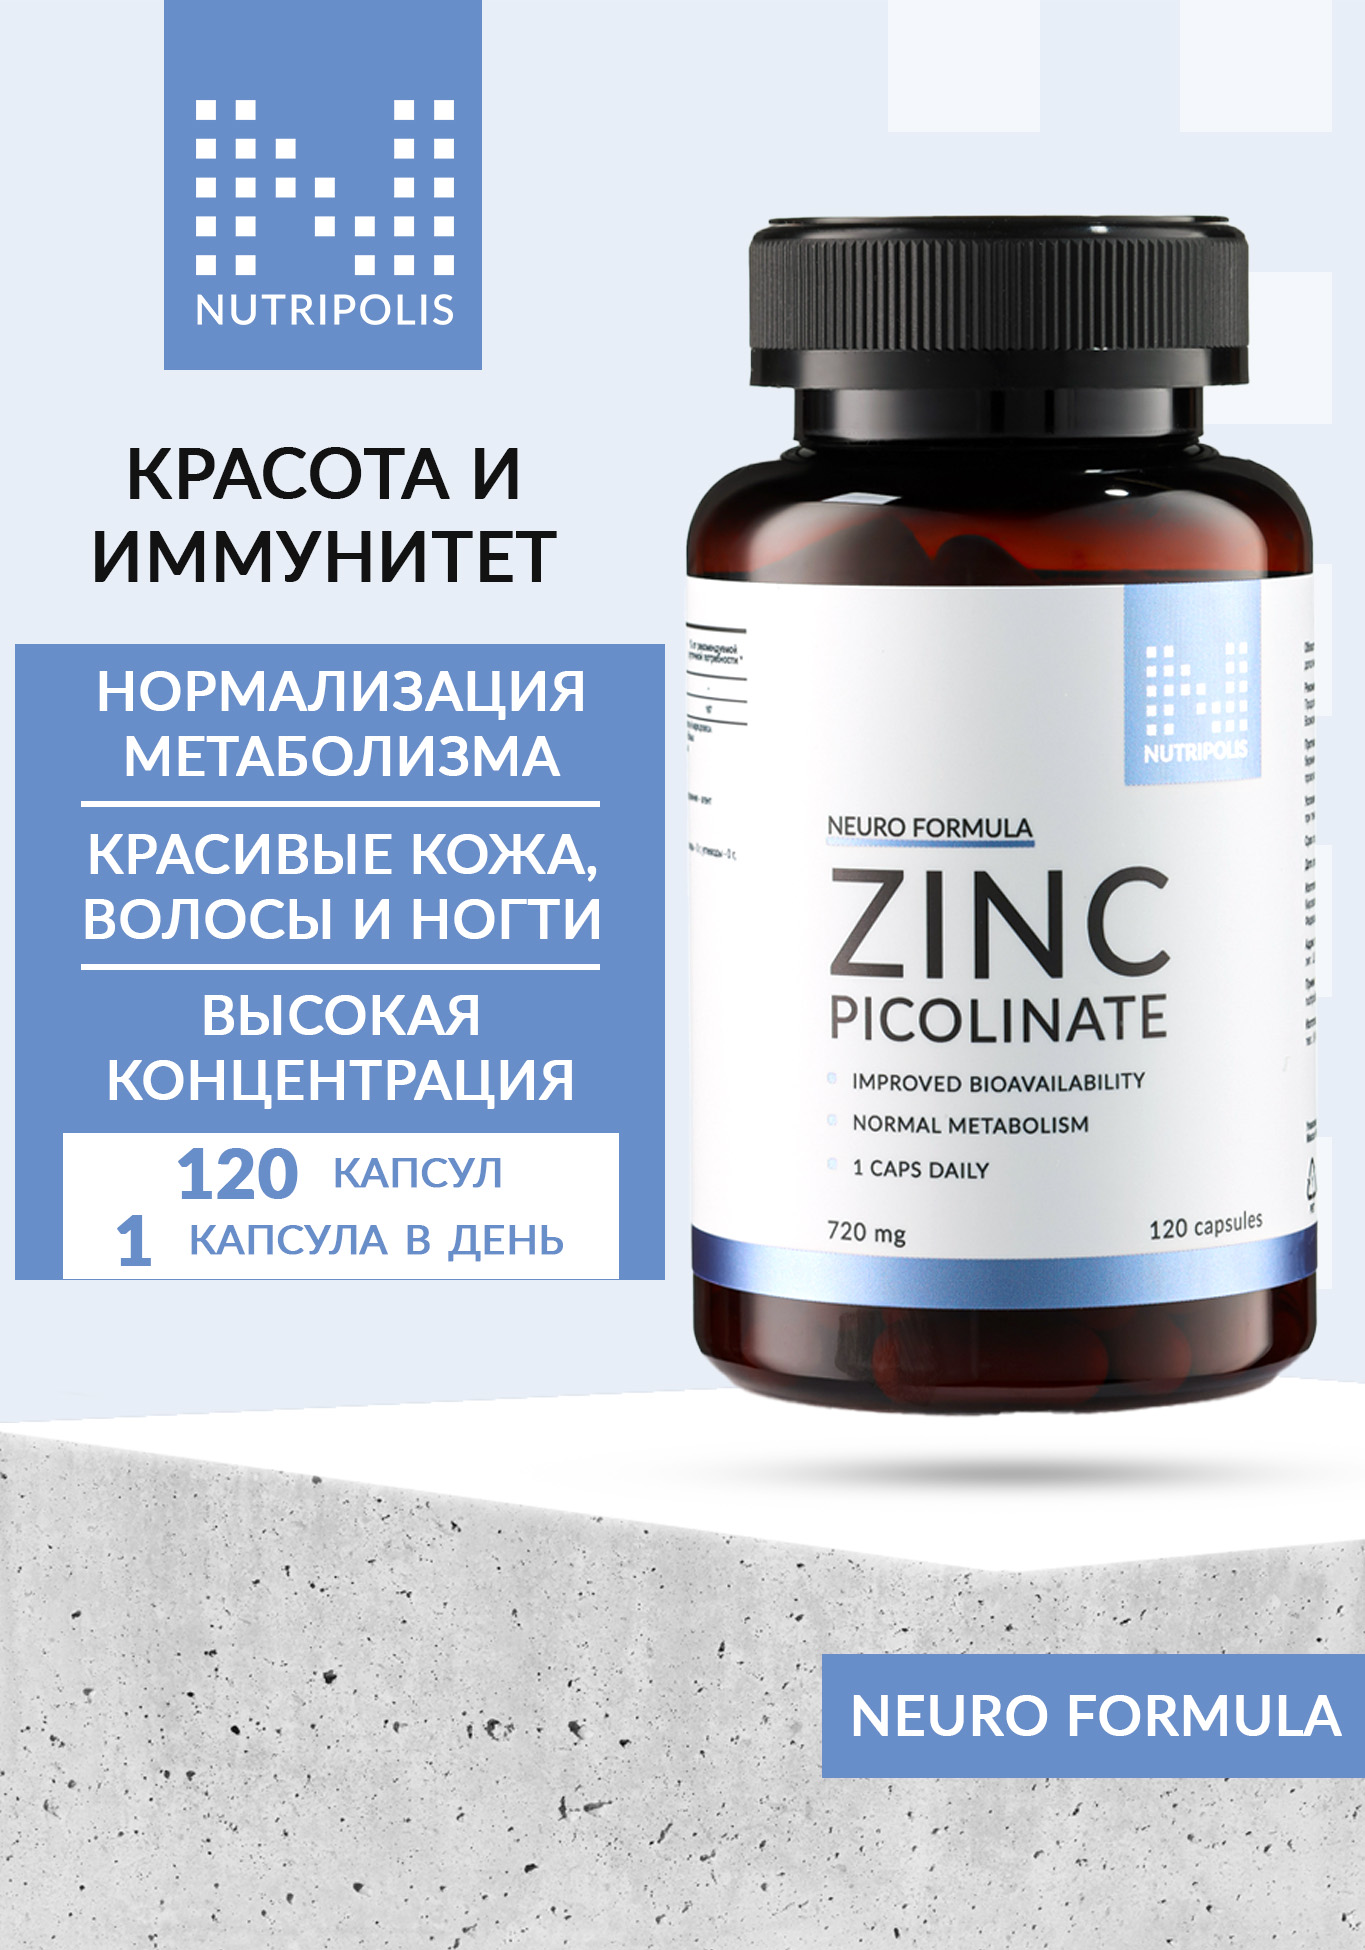 Zink picolinate (Пиколинат цинка) NUTRIPOLIS - фото 1